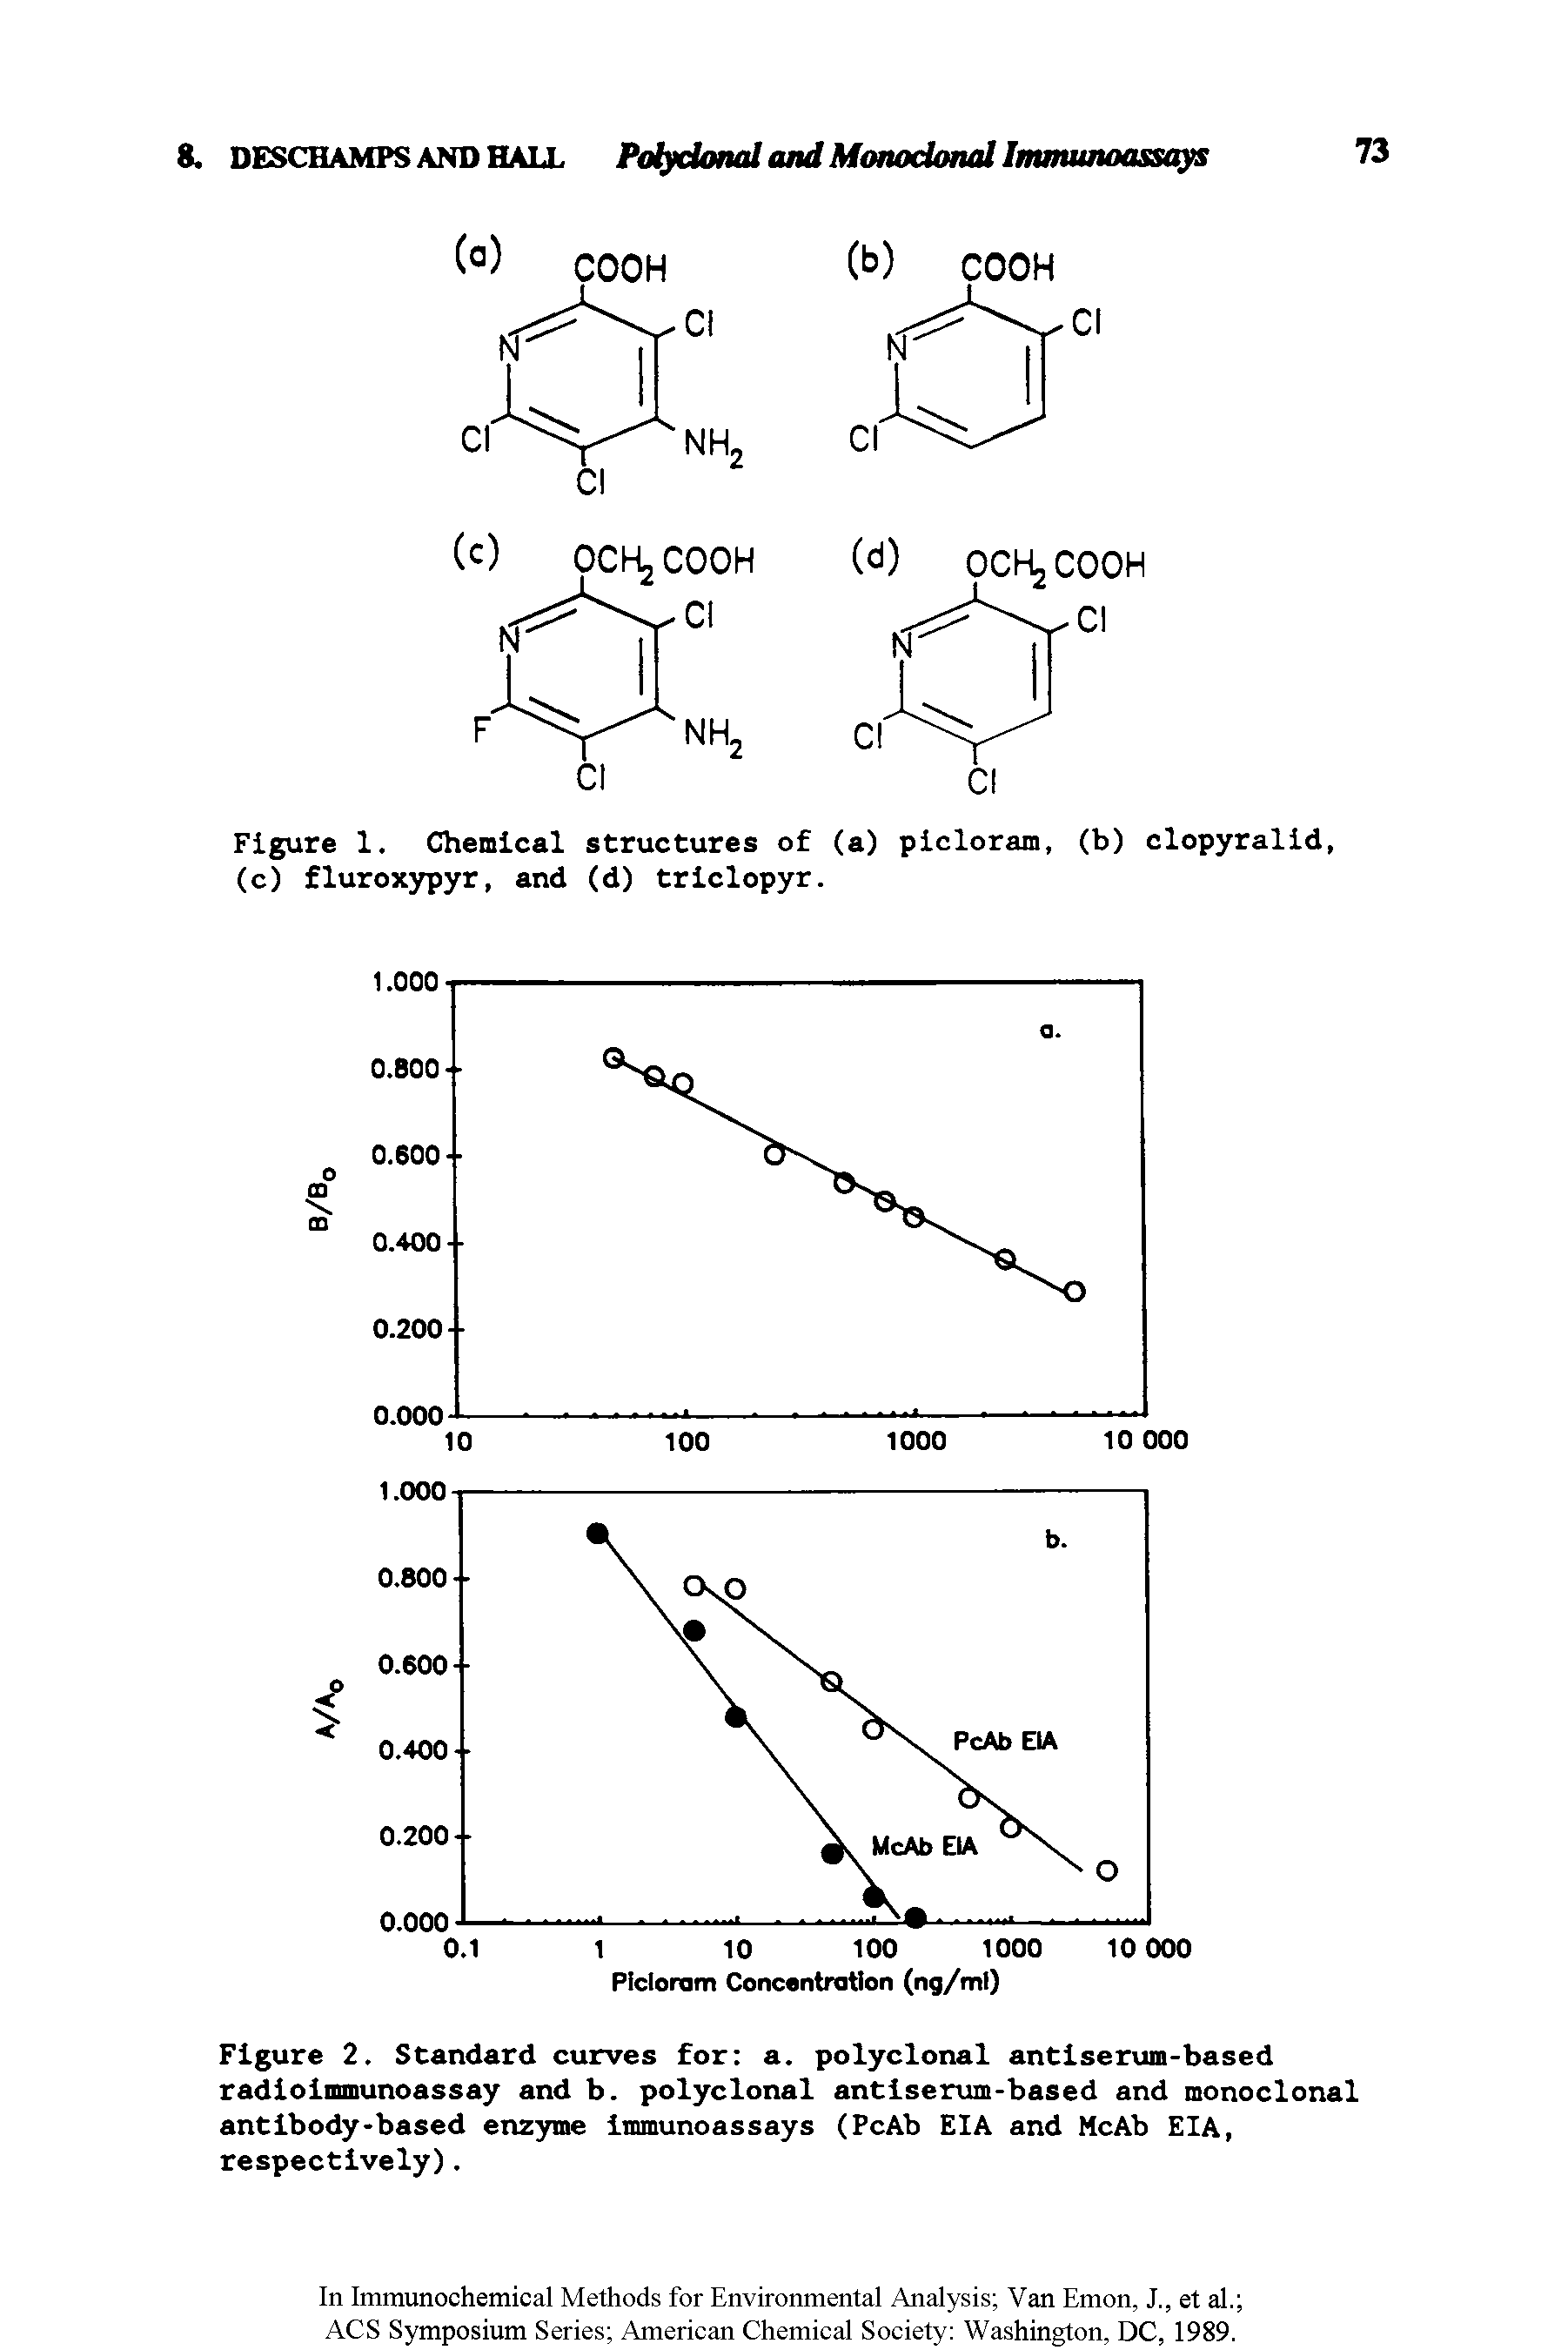 Figure 2. Standard curves for a. polyclonal antiserum-based radioimmunoassay and b. polyclonal antiserum-based and monoclonal antibody-based enzyme immunoassays (PcAb EIA and McAb EIA, respectively).